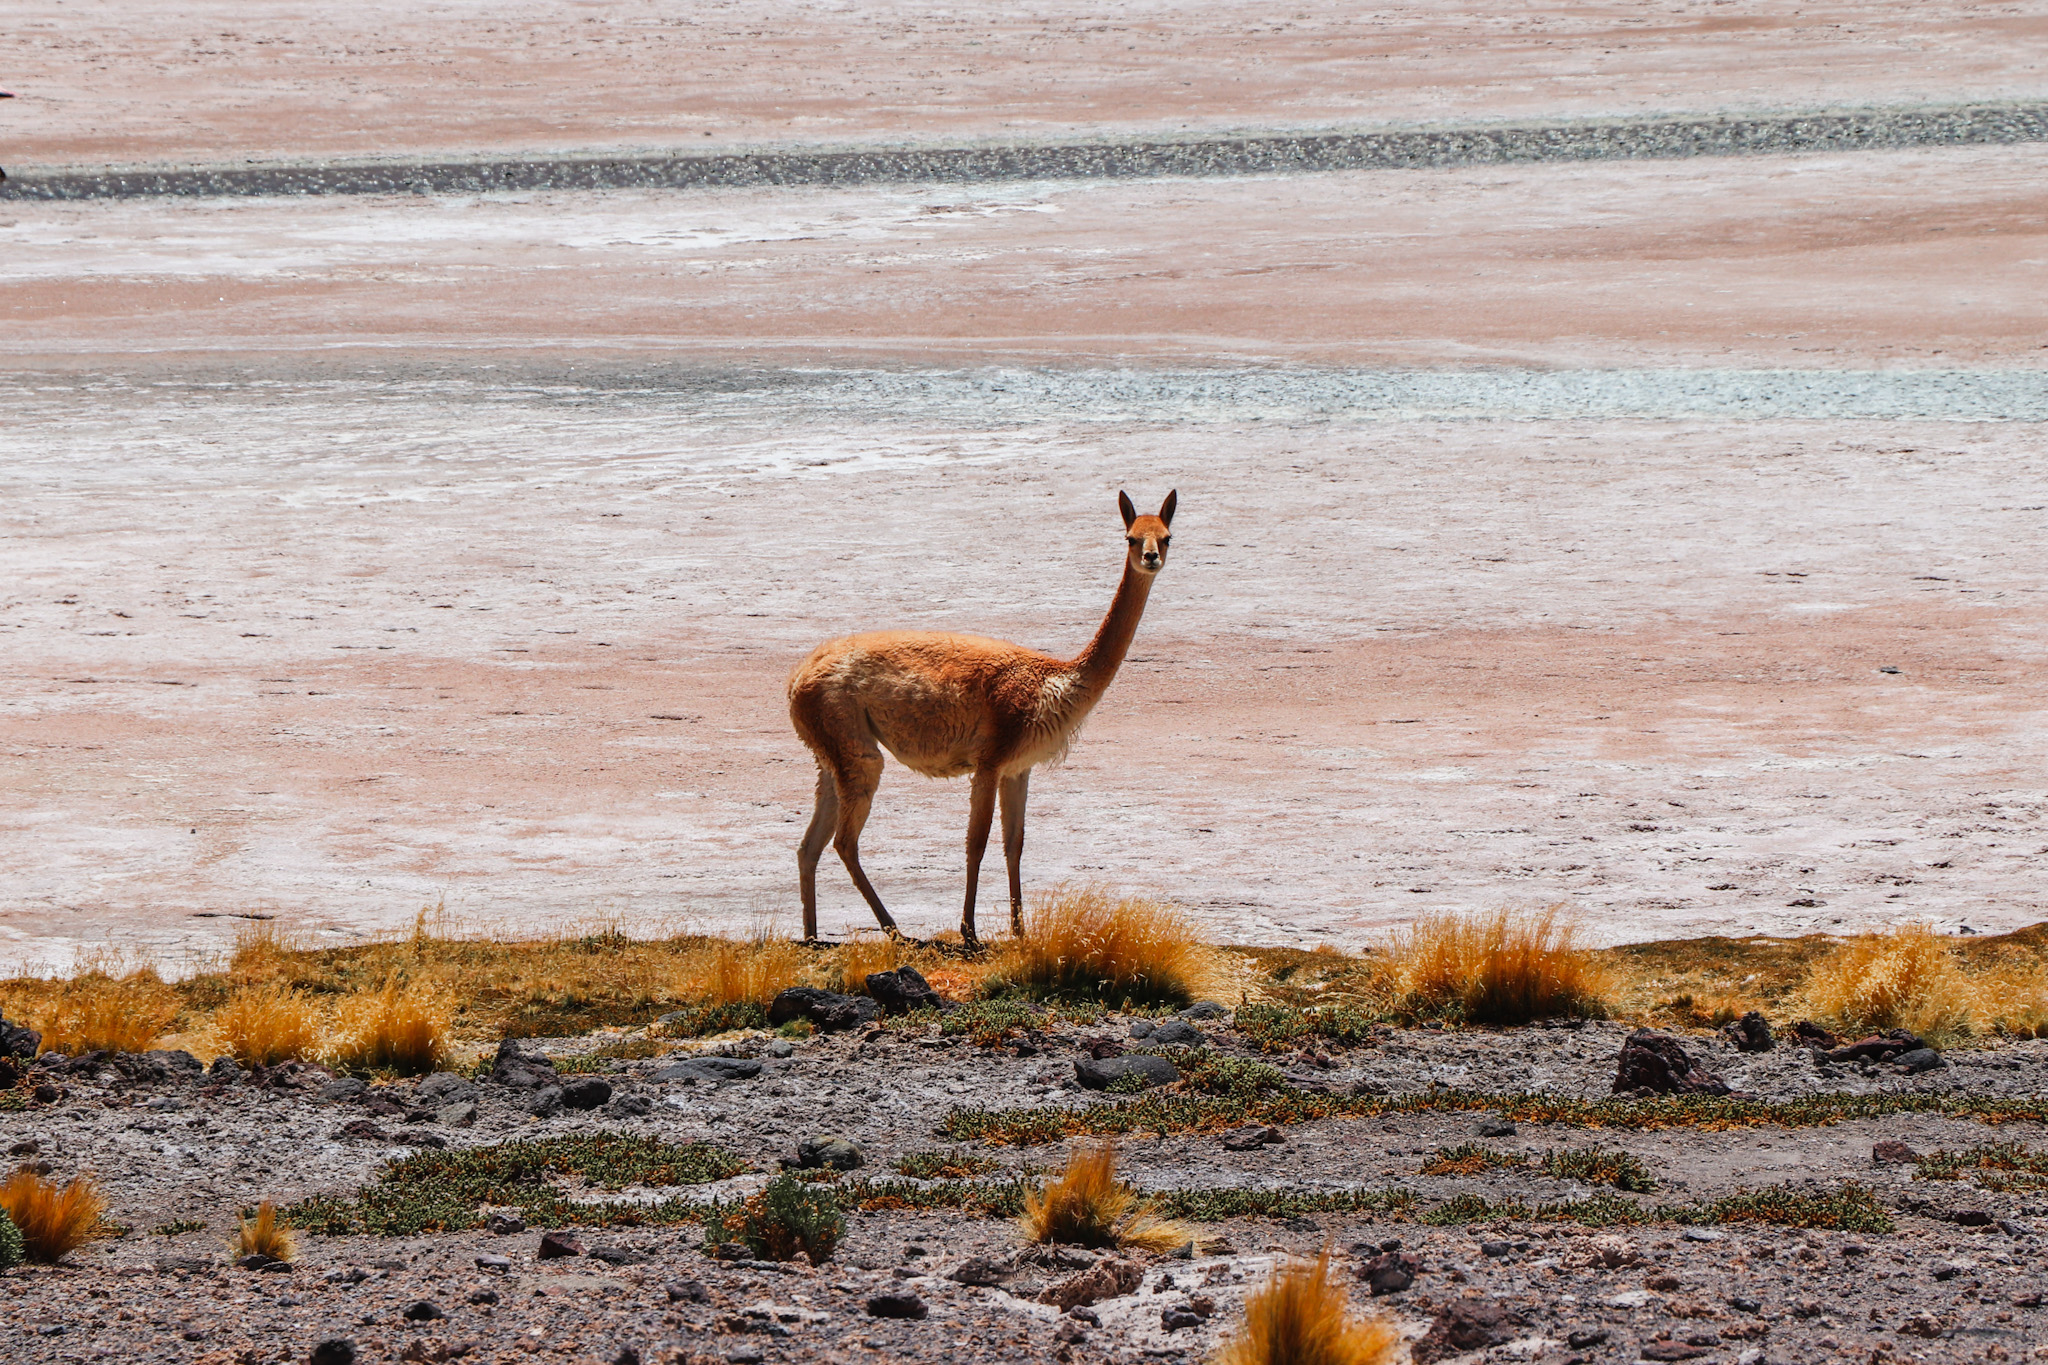 Uyuni Salt Flat Travel Guide: Watch vicuñas grazing